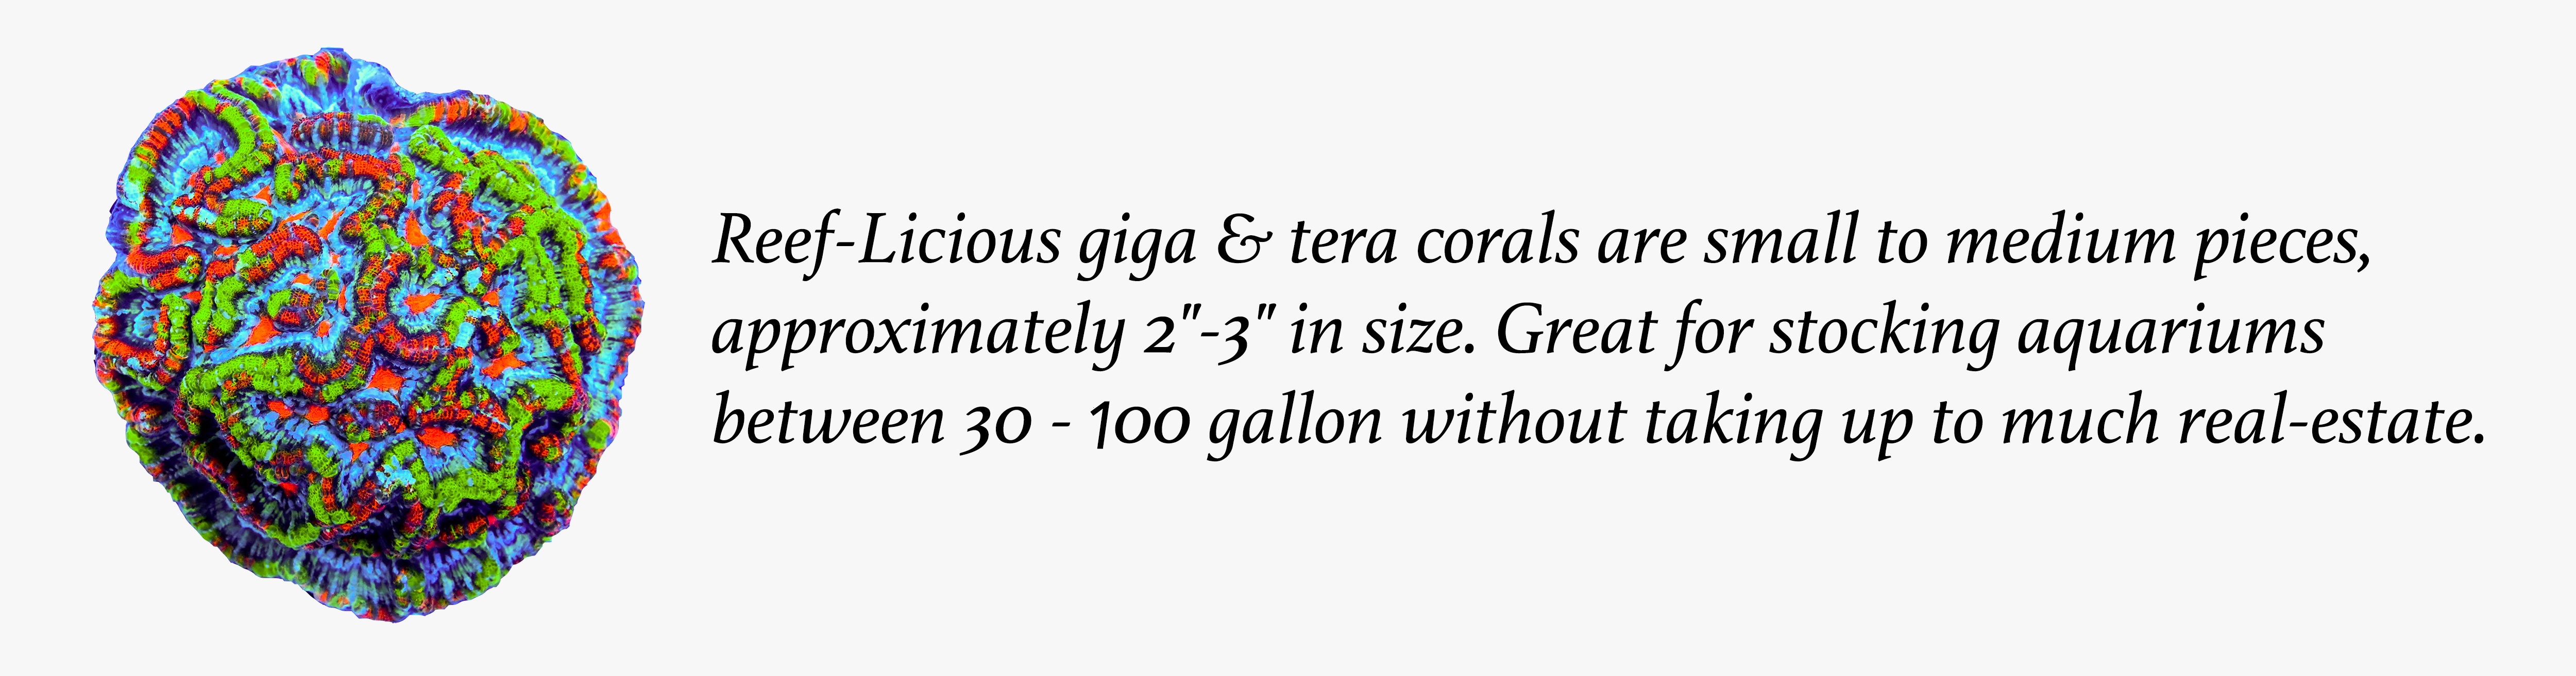 giga-tera-corals7.jpg